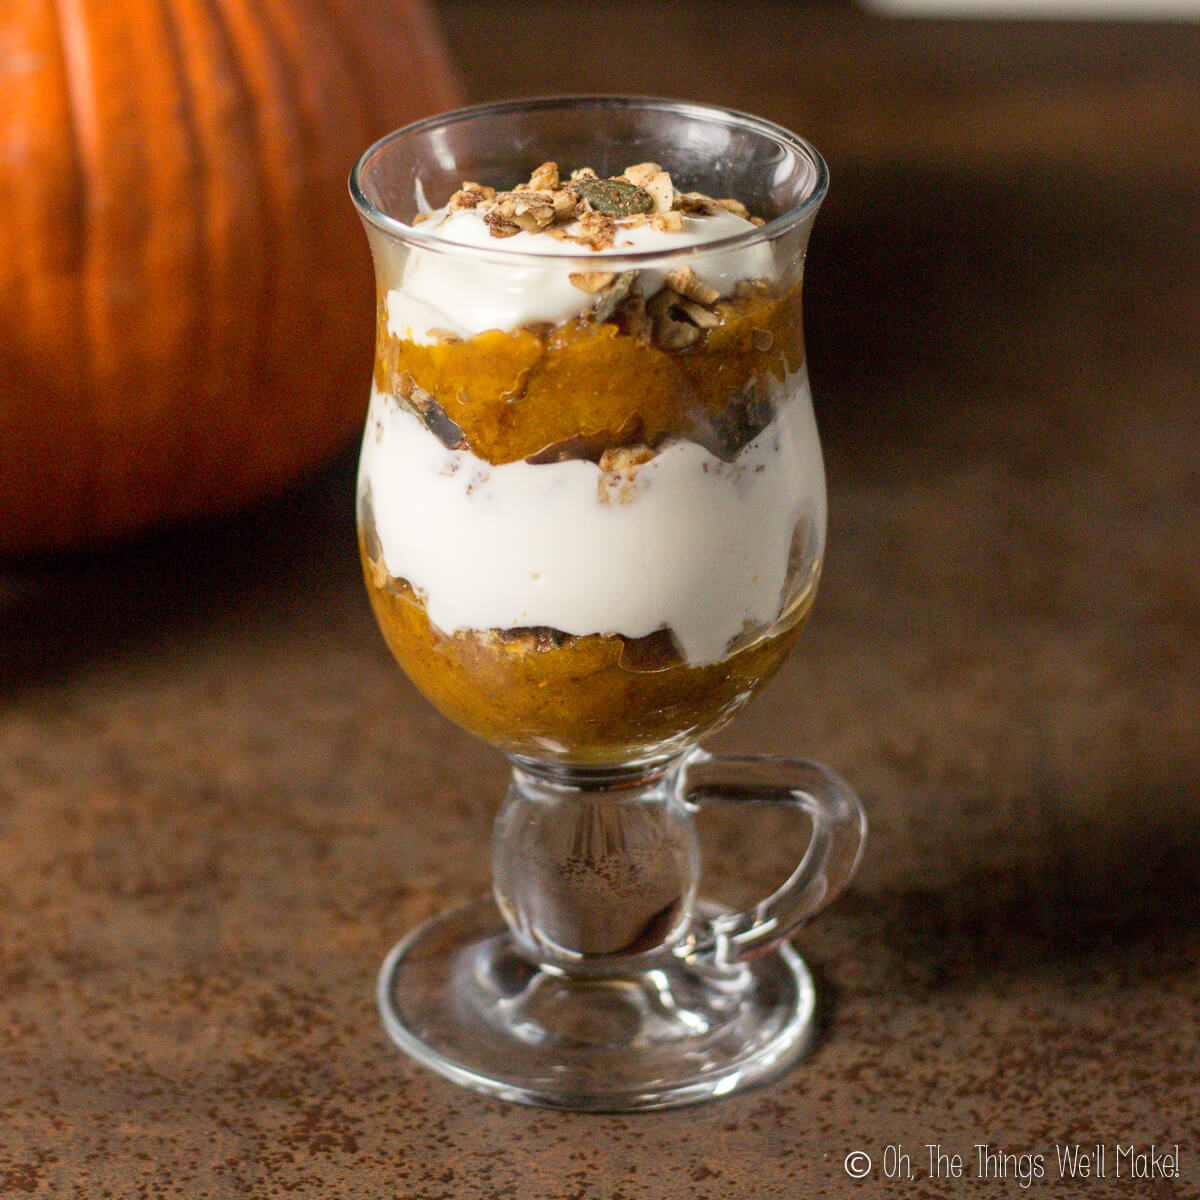 A clear glass full of pumpkin pie yogurt parfait showing off the layers of yogurt, pumpkin pie, and nuts.